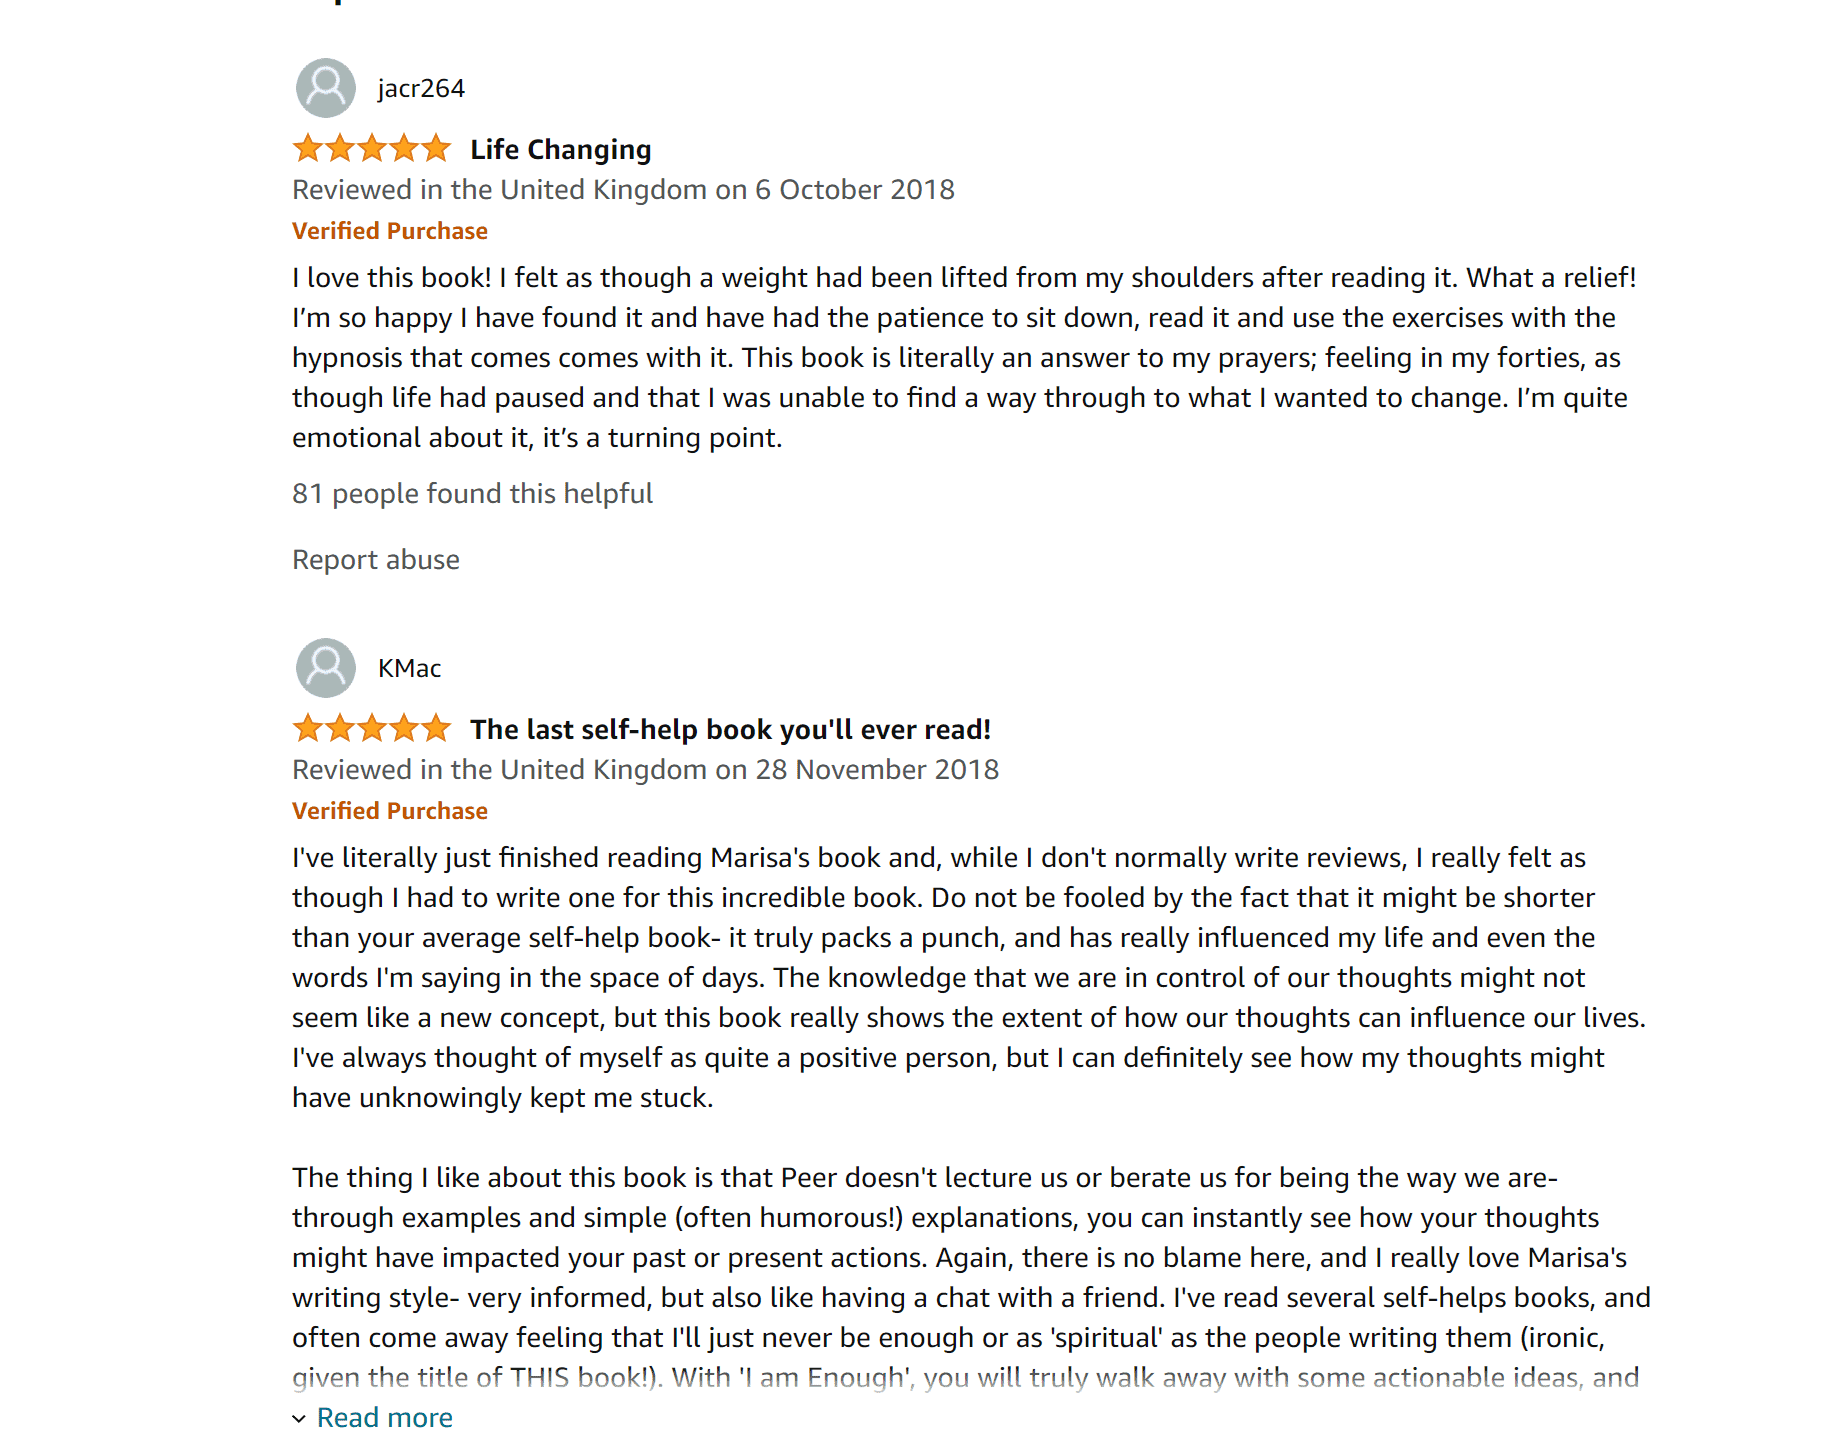 Marisa Peer Amazon Customer Reviews